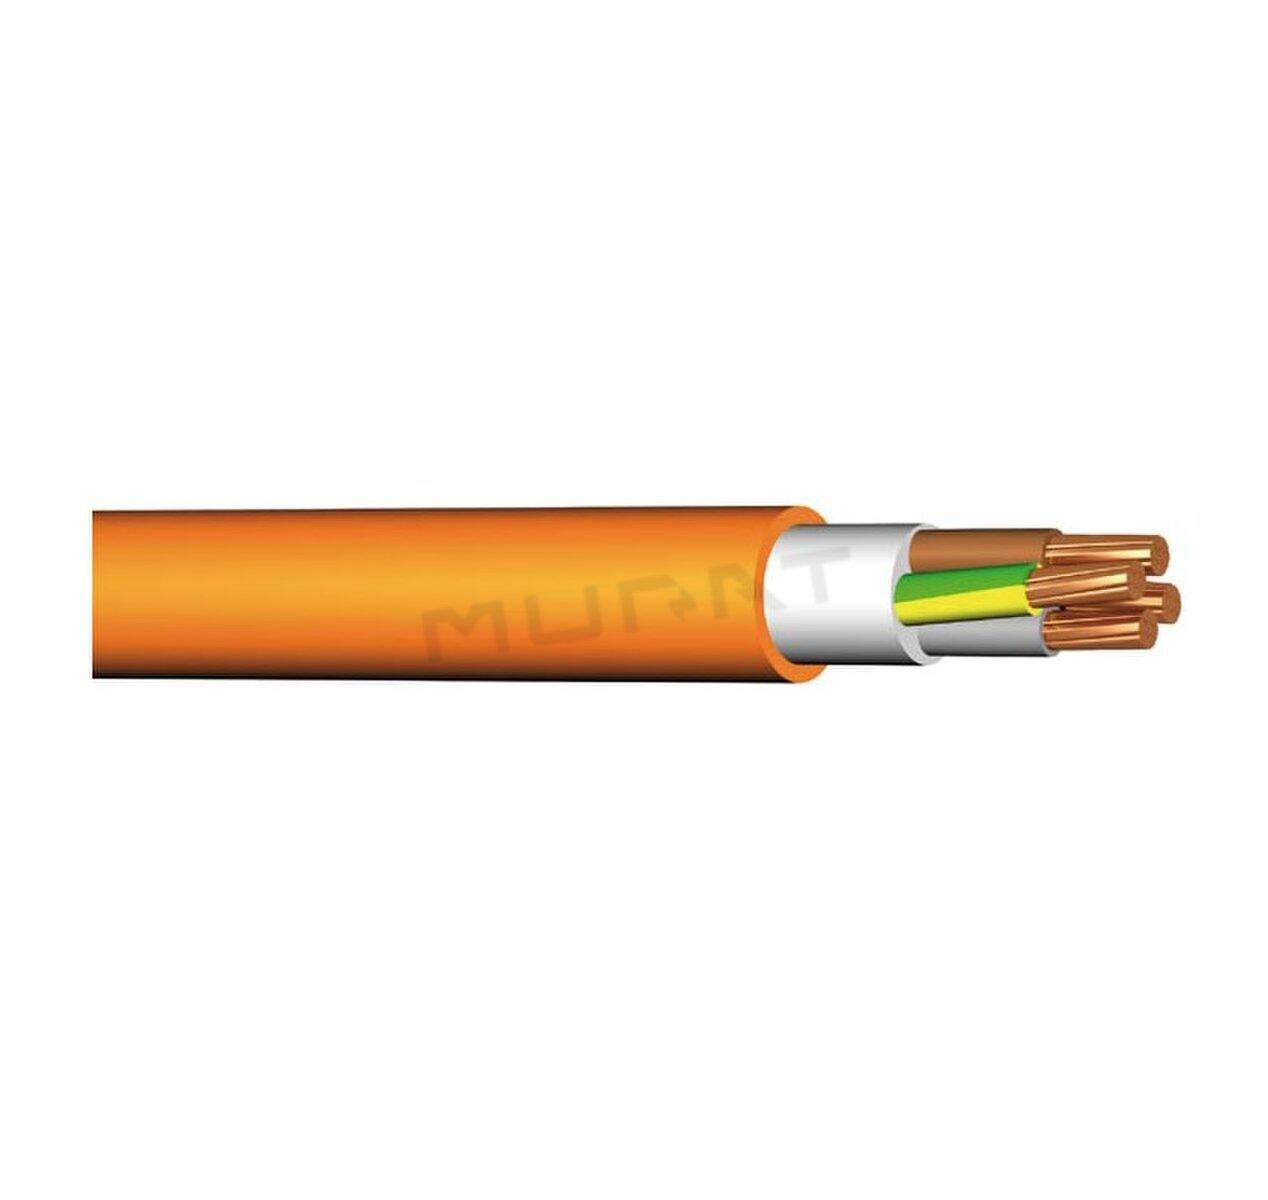 Kábel PRAFlaSafe X-O 3x1,5 mm2 RE B2ca s1d1a1